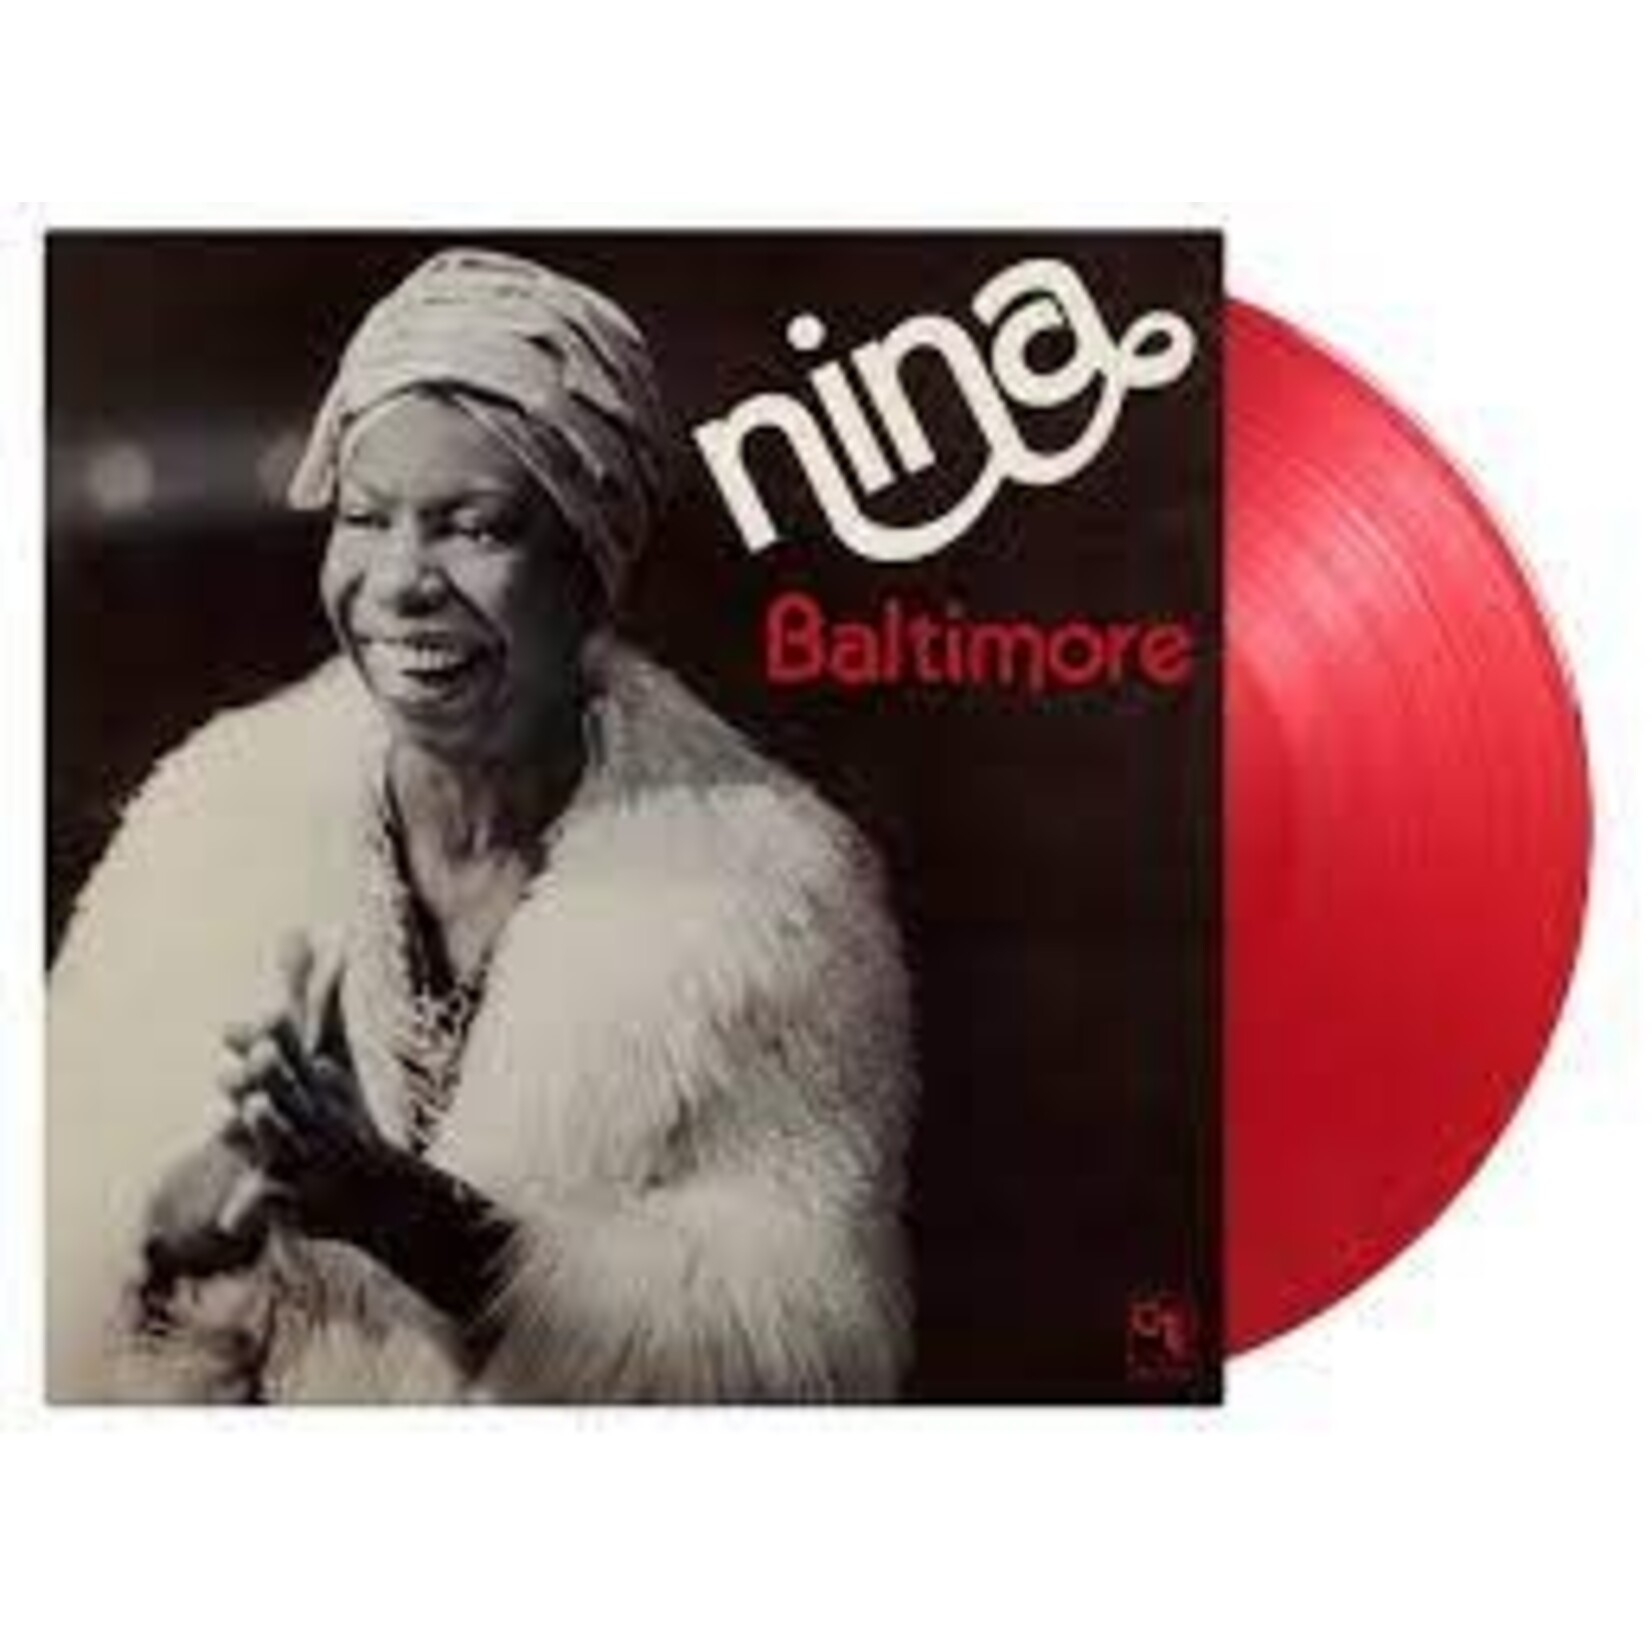 [New] Nina Simone - Baltimore (180g, red vinyl)